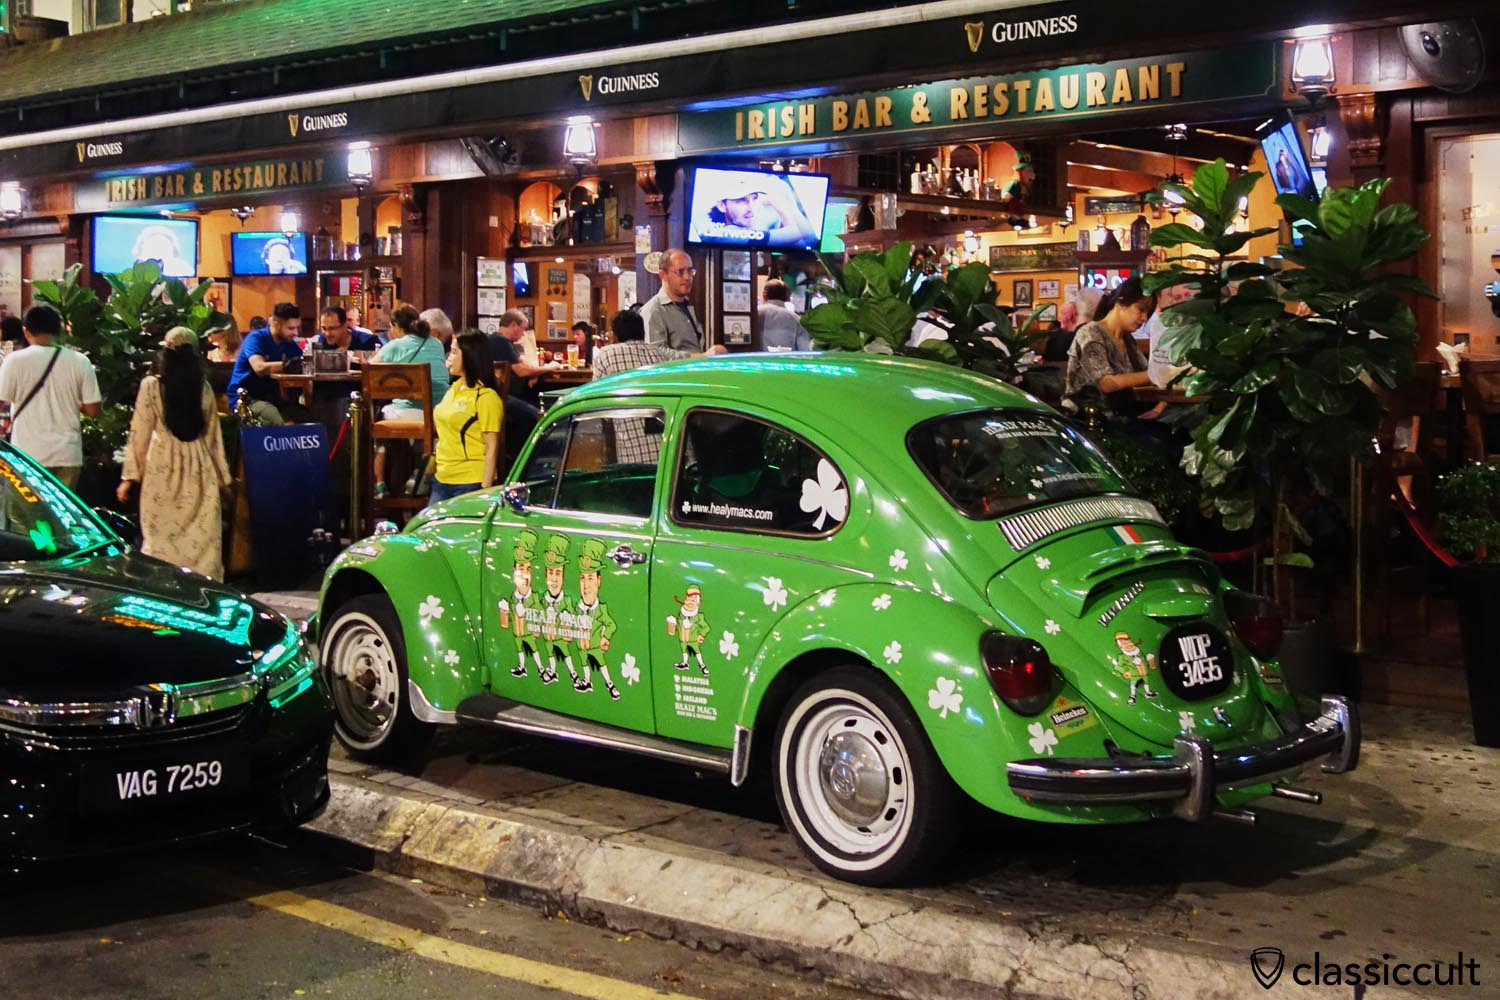 VW Beetle Kuala Lumpur Healy Macs Irish Bar